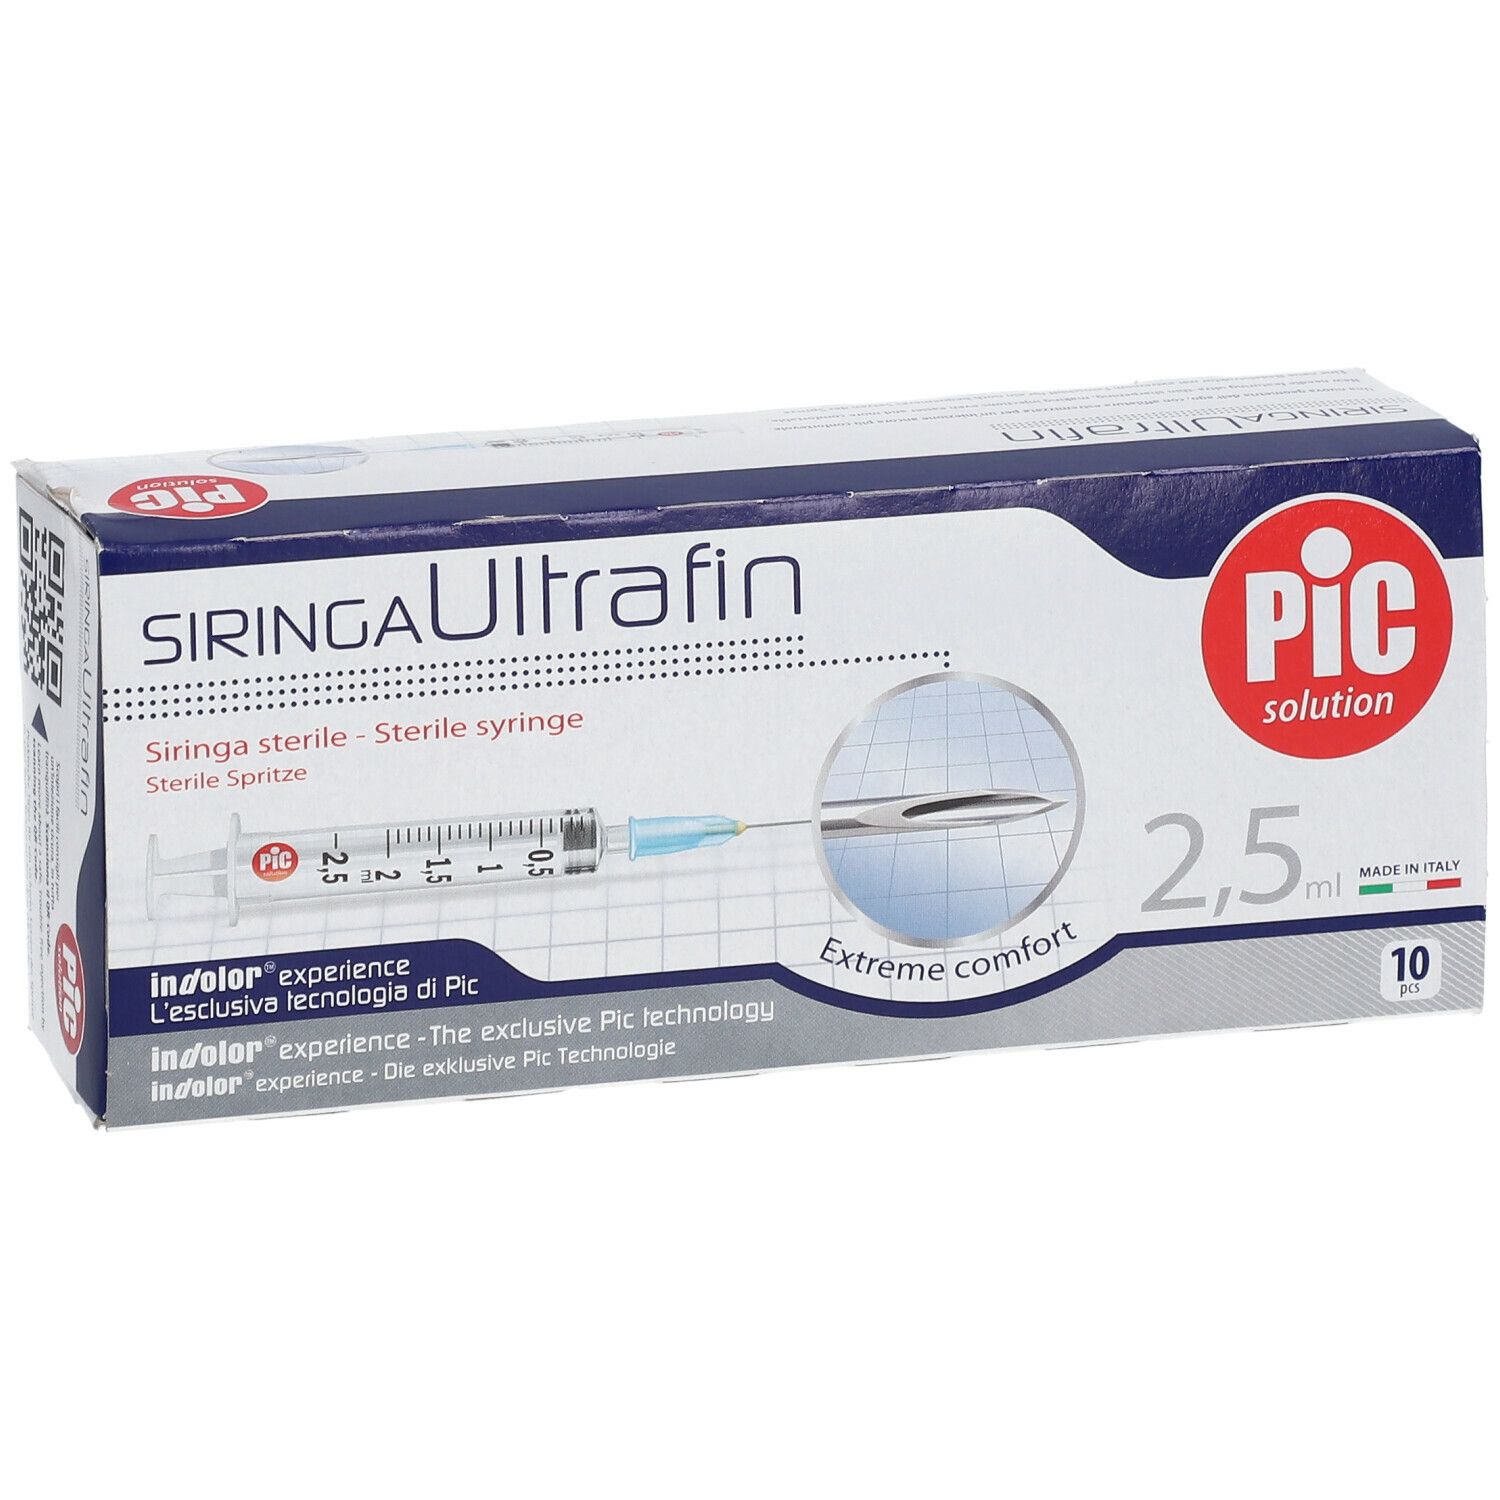 Pic Solution Siringa Ultrafin Sterile 2,5 ml